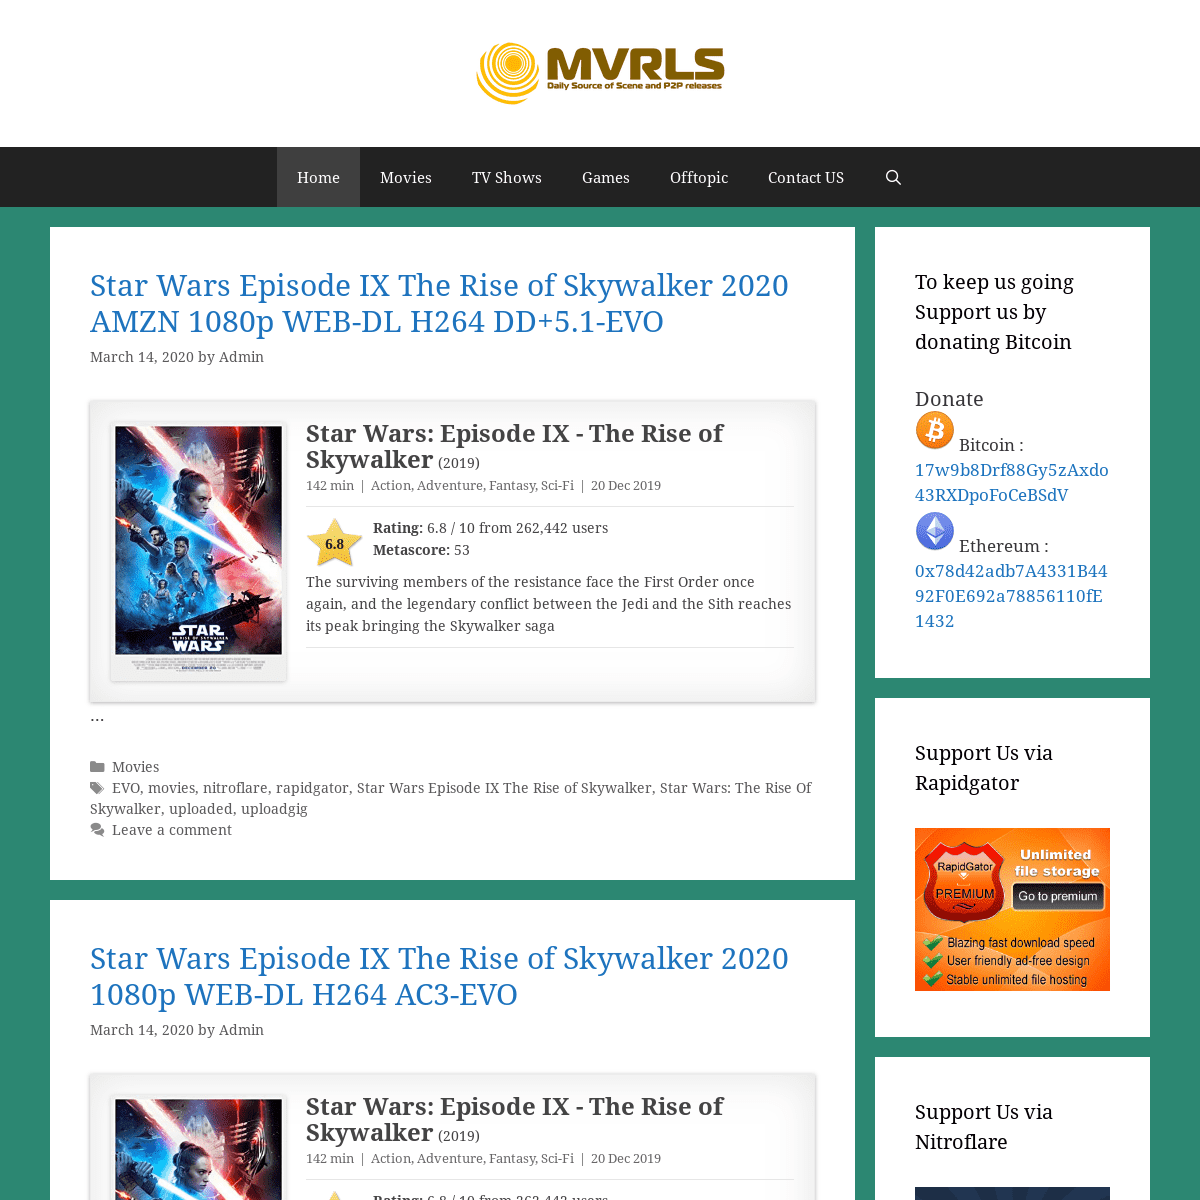 A complete backup of mvrls.com